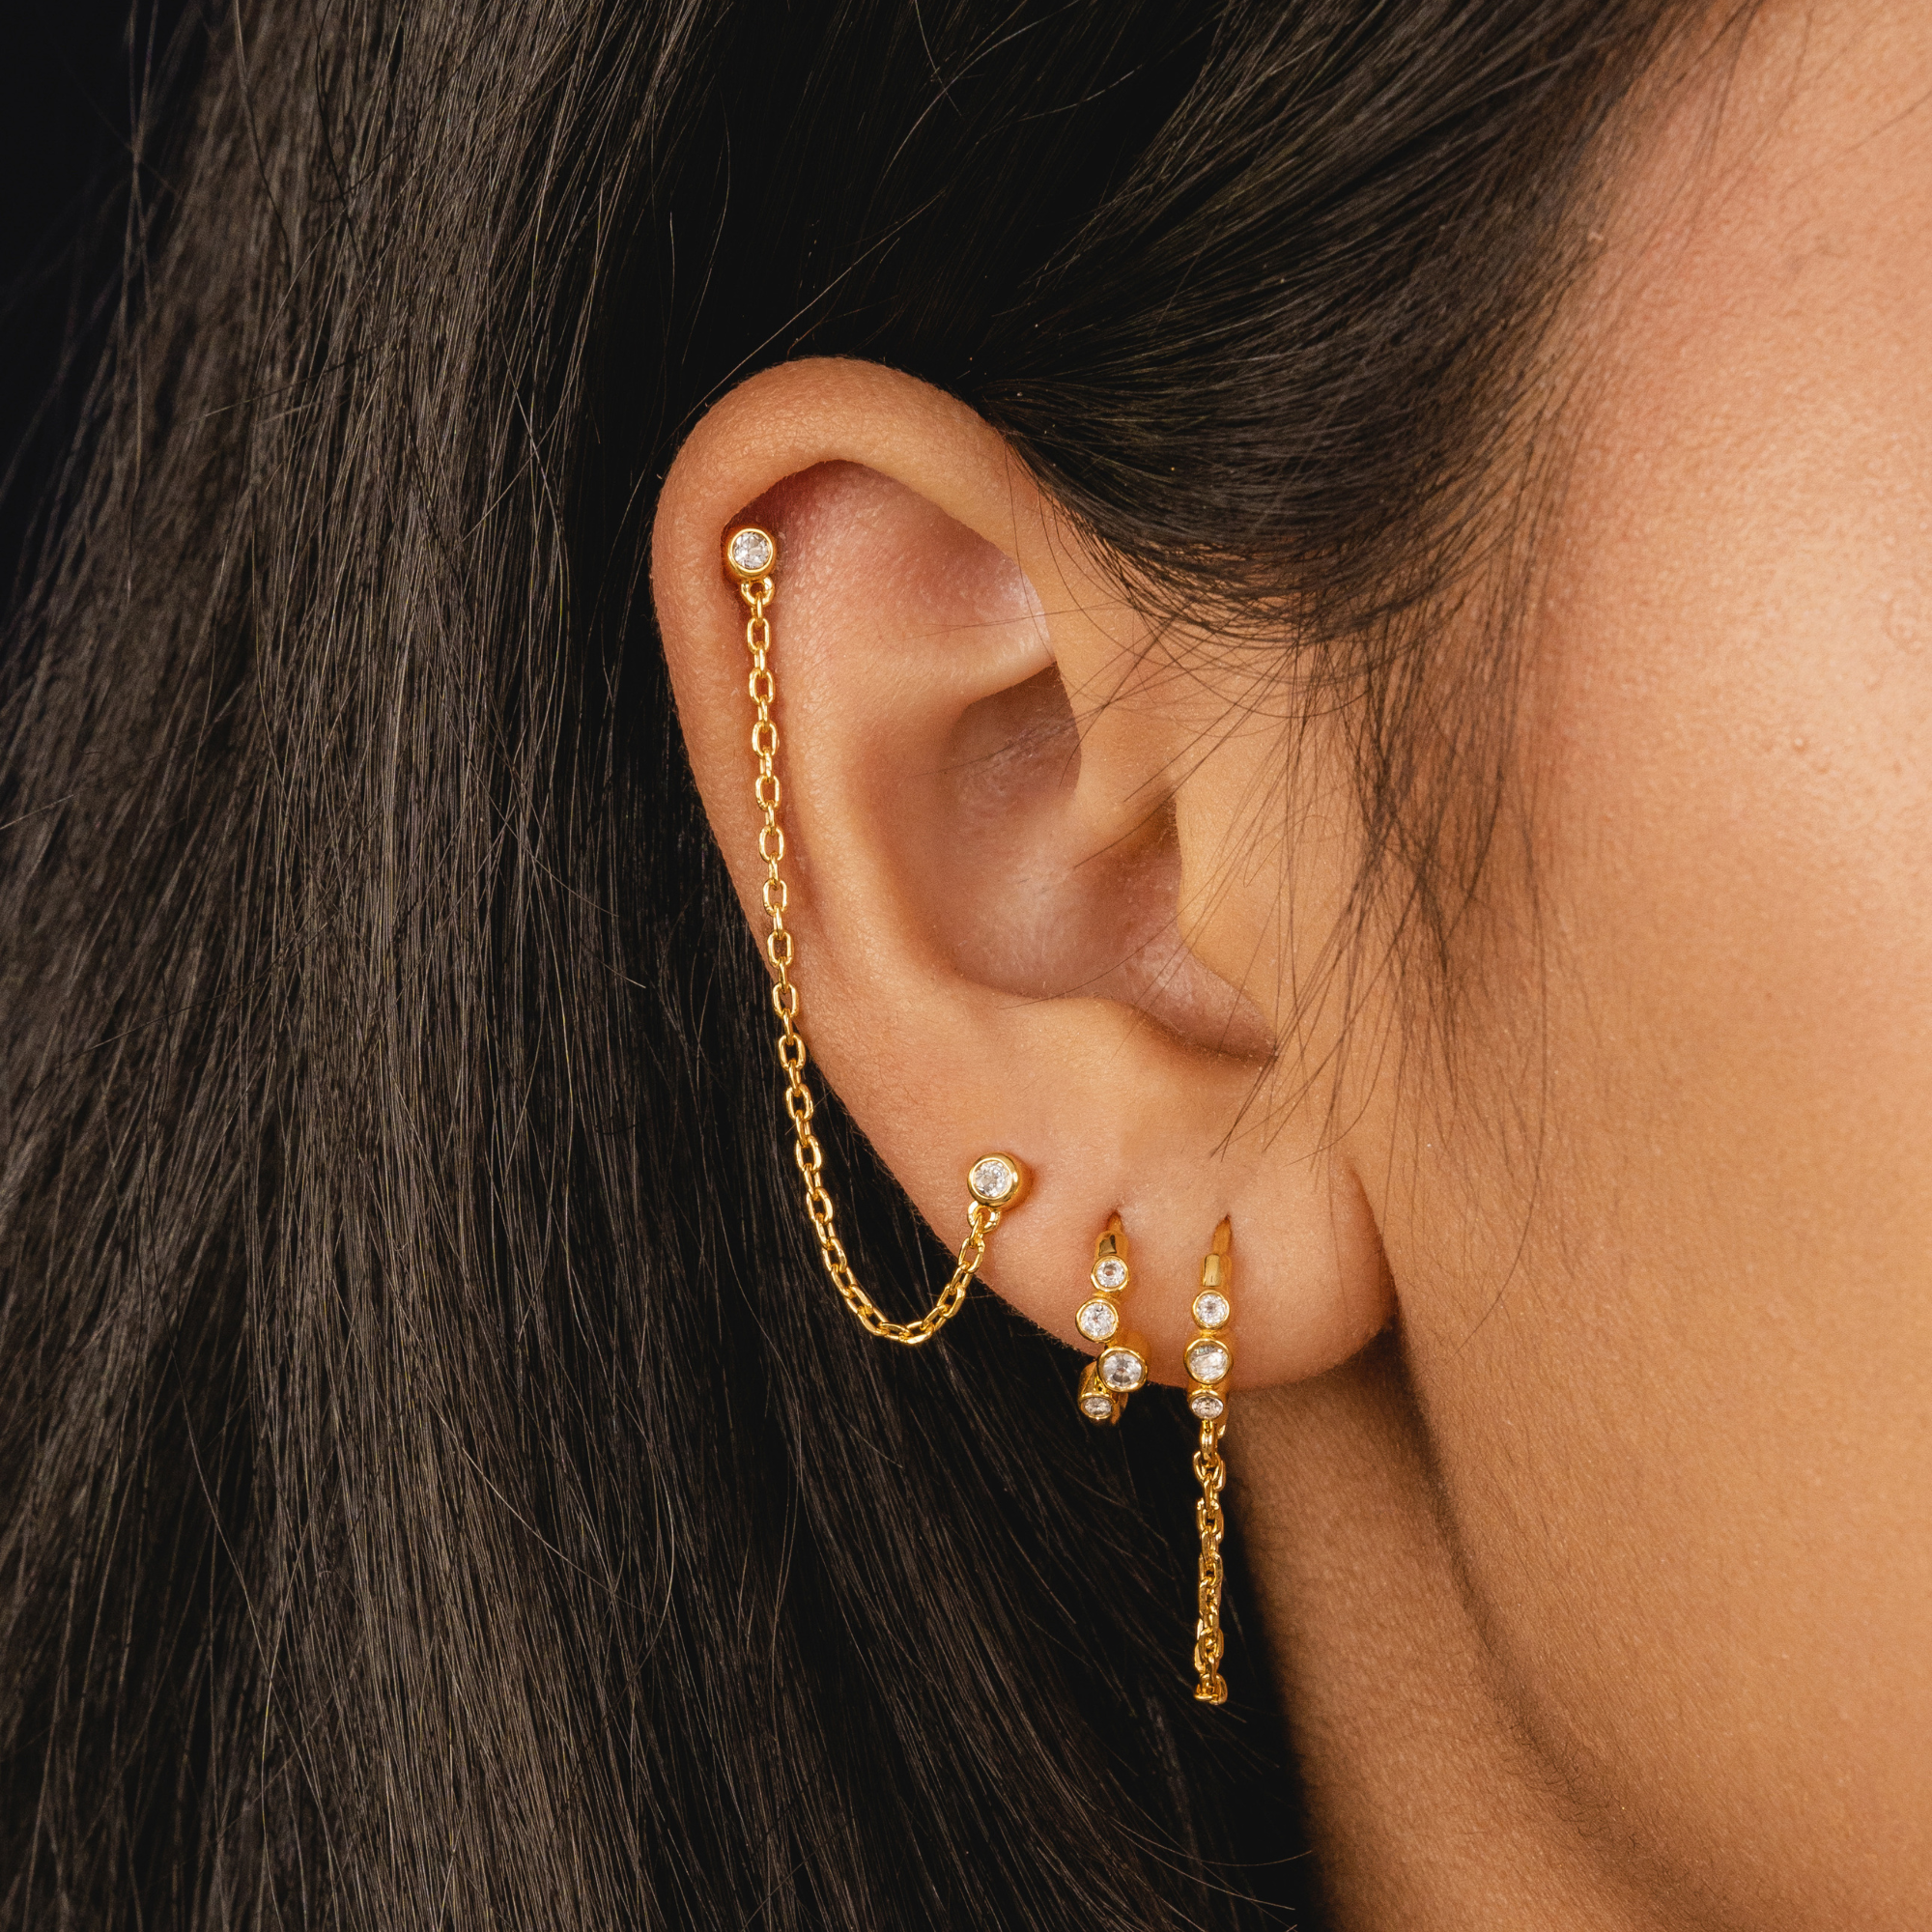 Buy Chain Stud Earrings Online In India  Etsy India